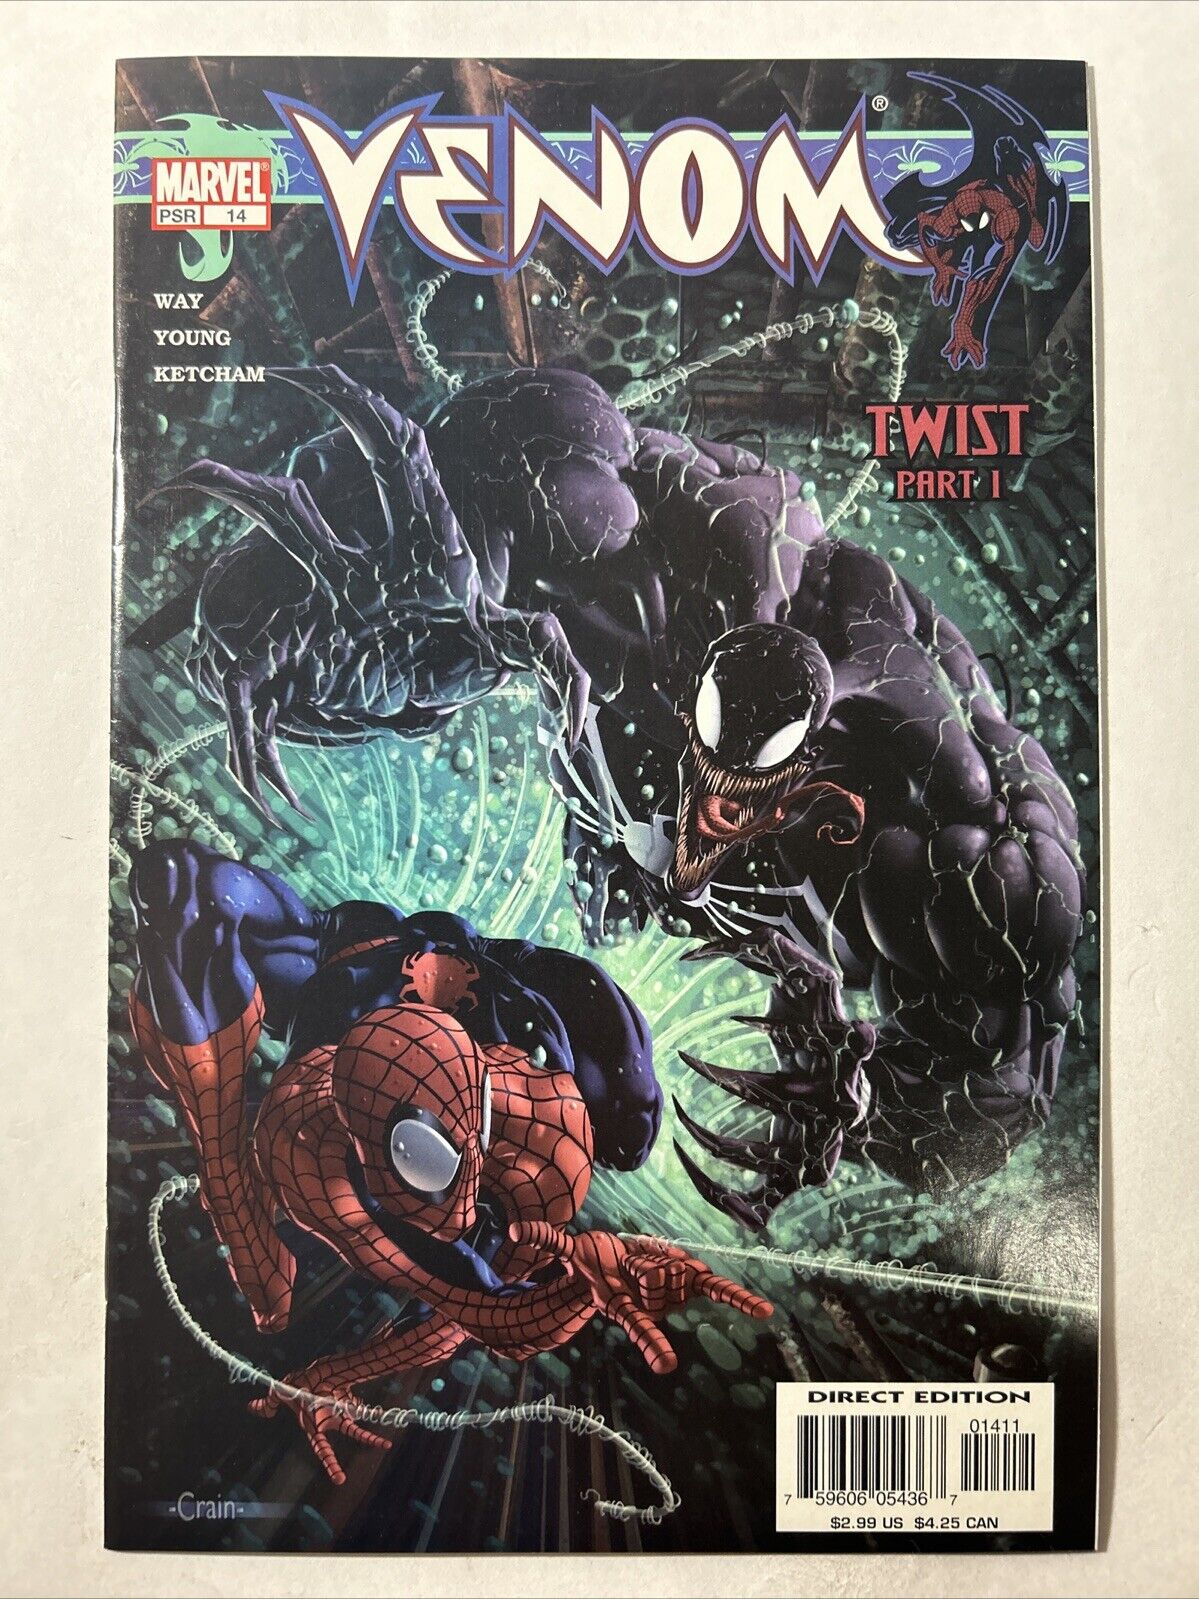 Venom (2003) # 14 Clayton Crain cover - Twist Part 1 NM CGC It High Grade